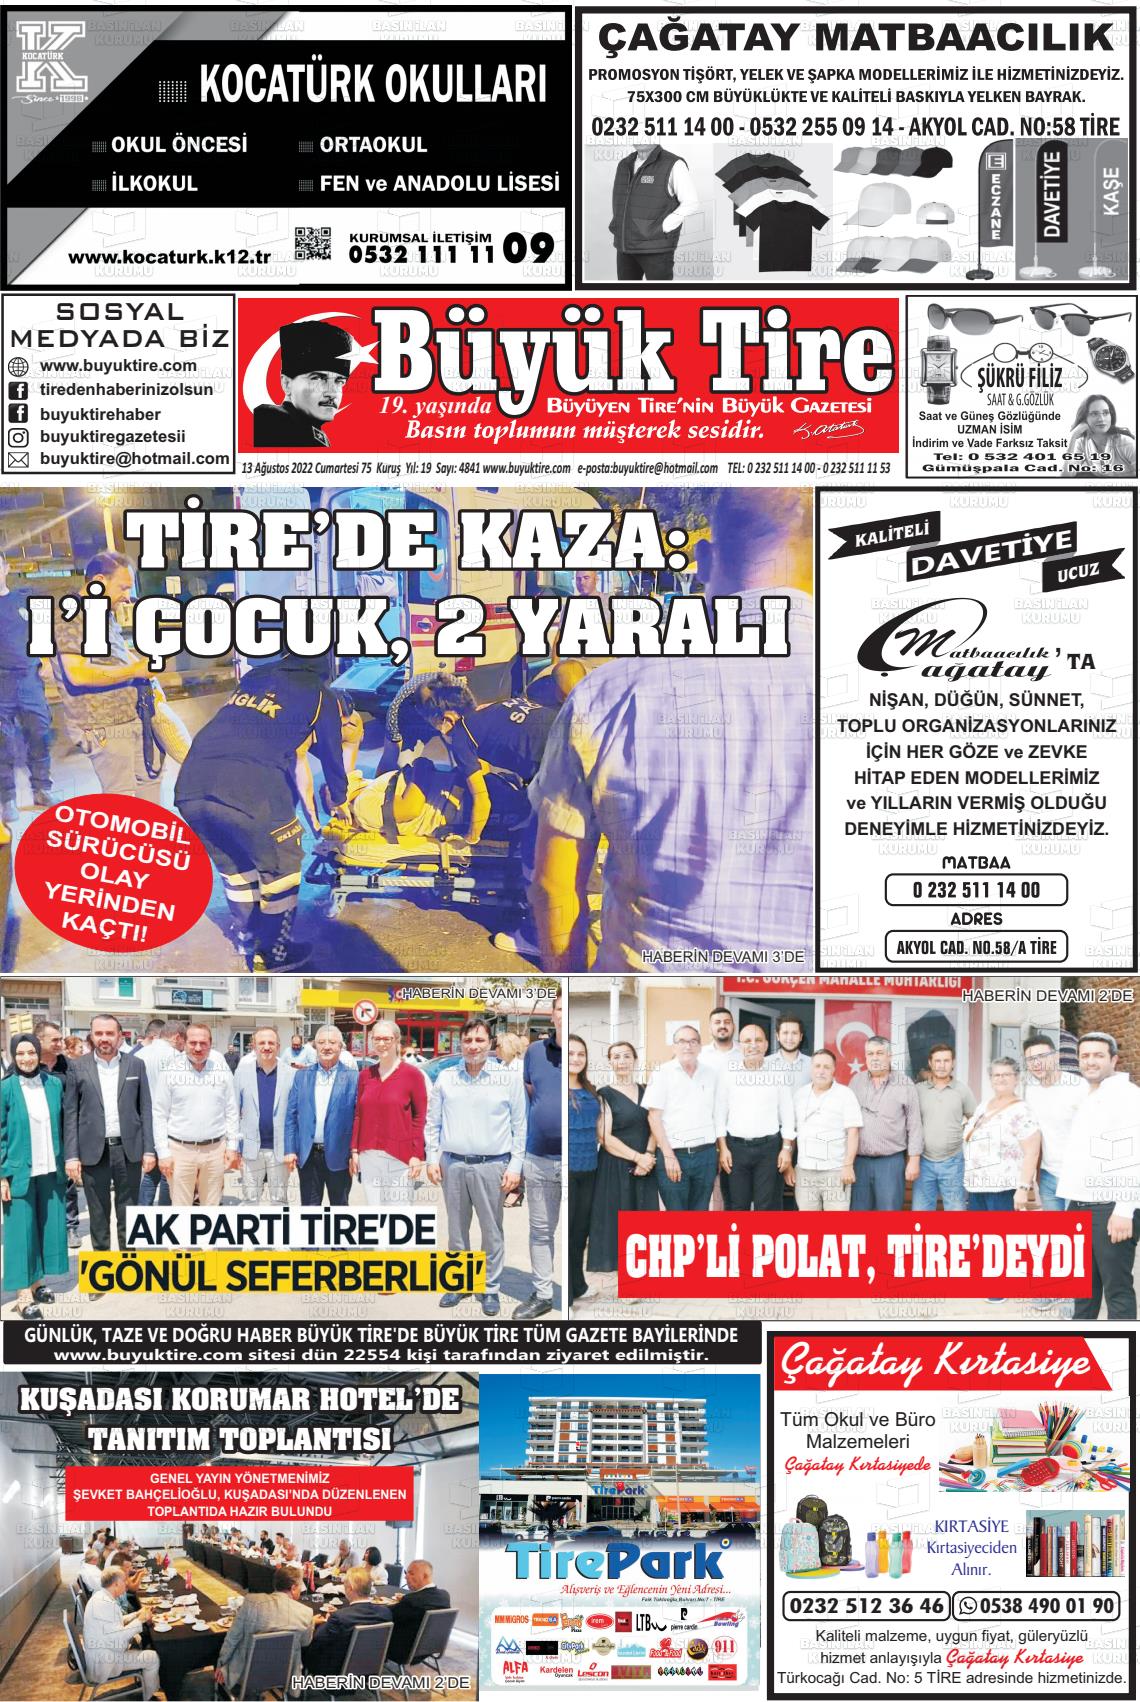 13 Ağustos 2022 Büyük Tire Gazete Manşeti